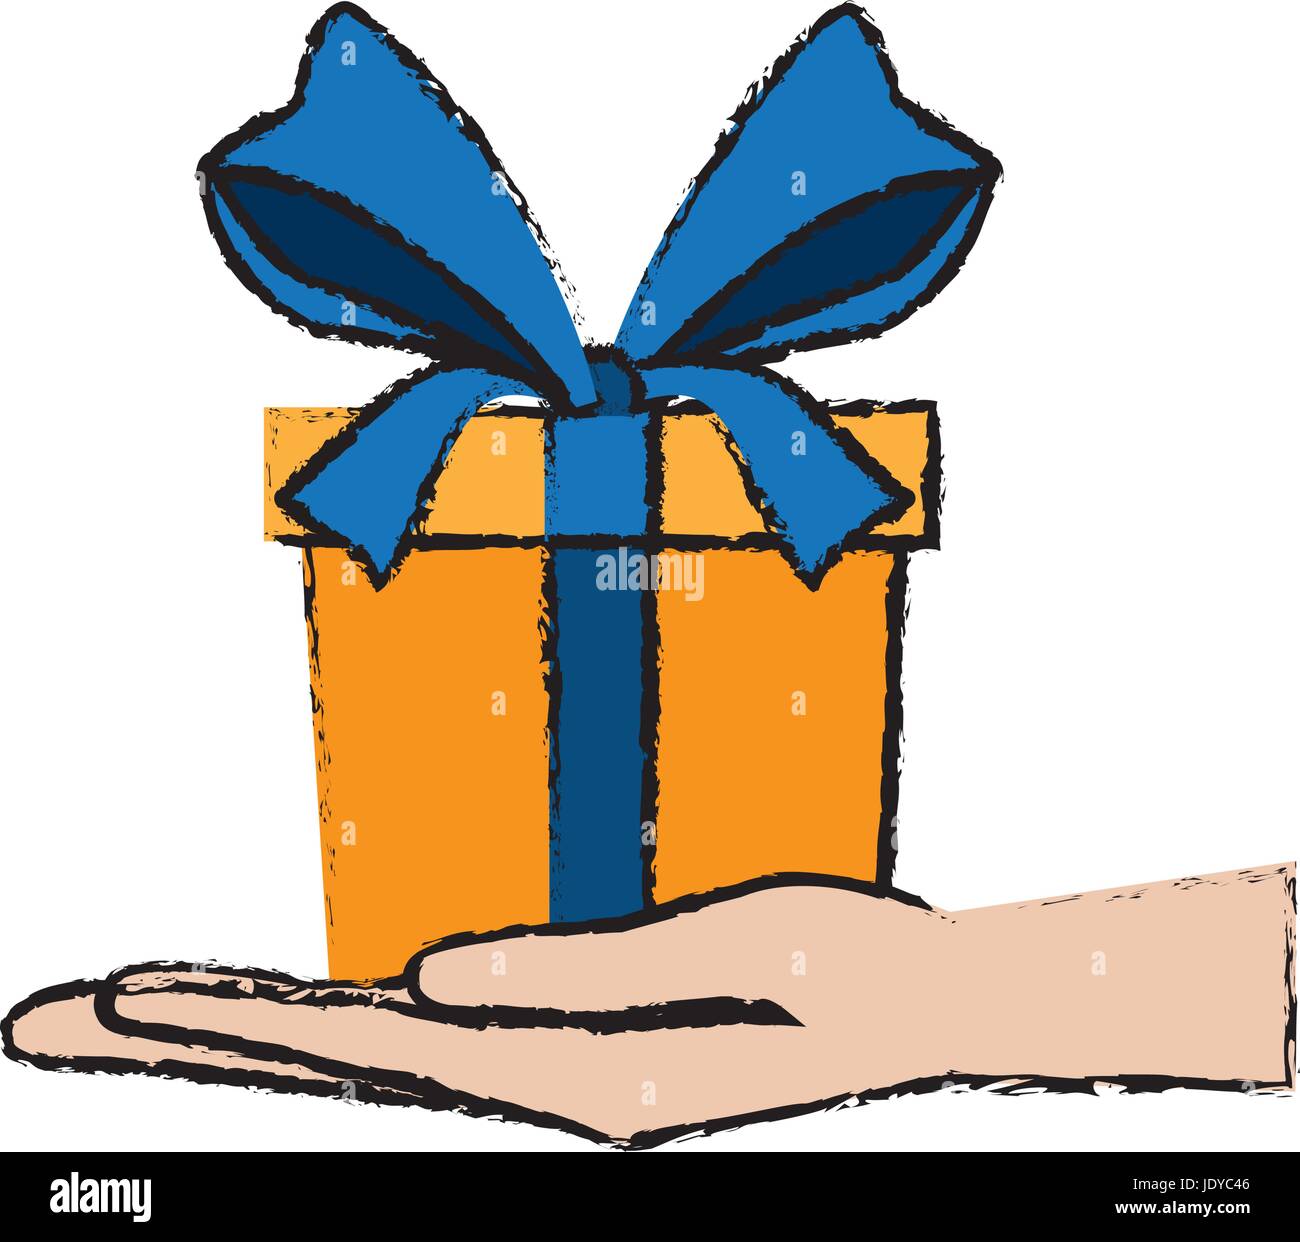 Download Hand Holding Yellow Gift Box Image Stock Vector Image Art Alamy Yellowimages Mockups